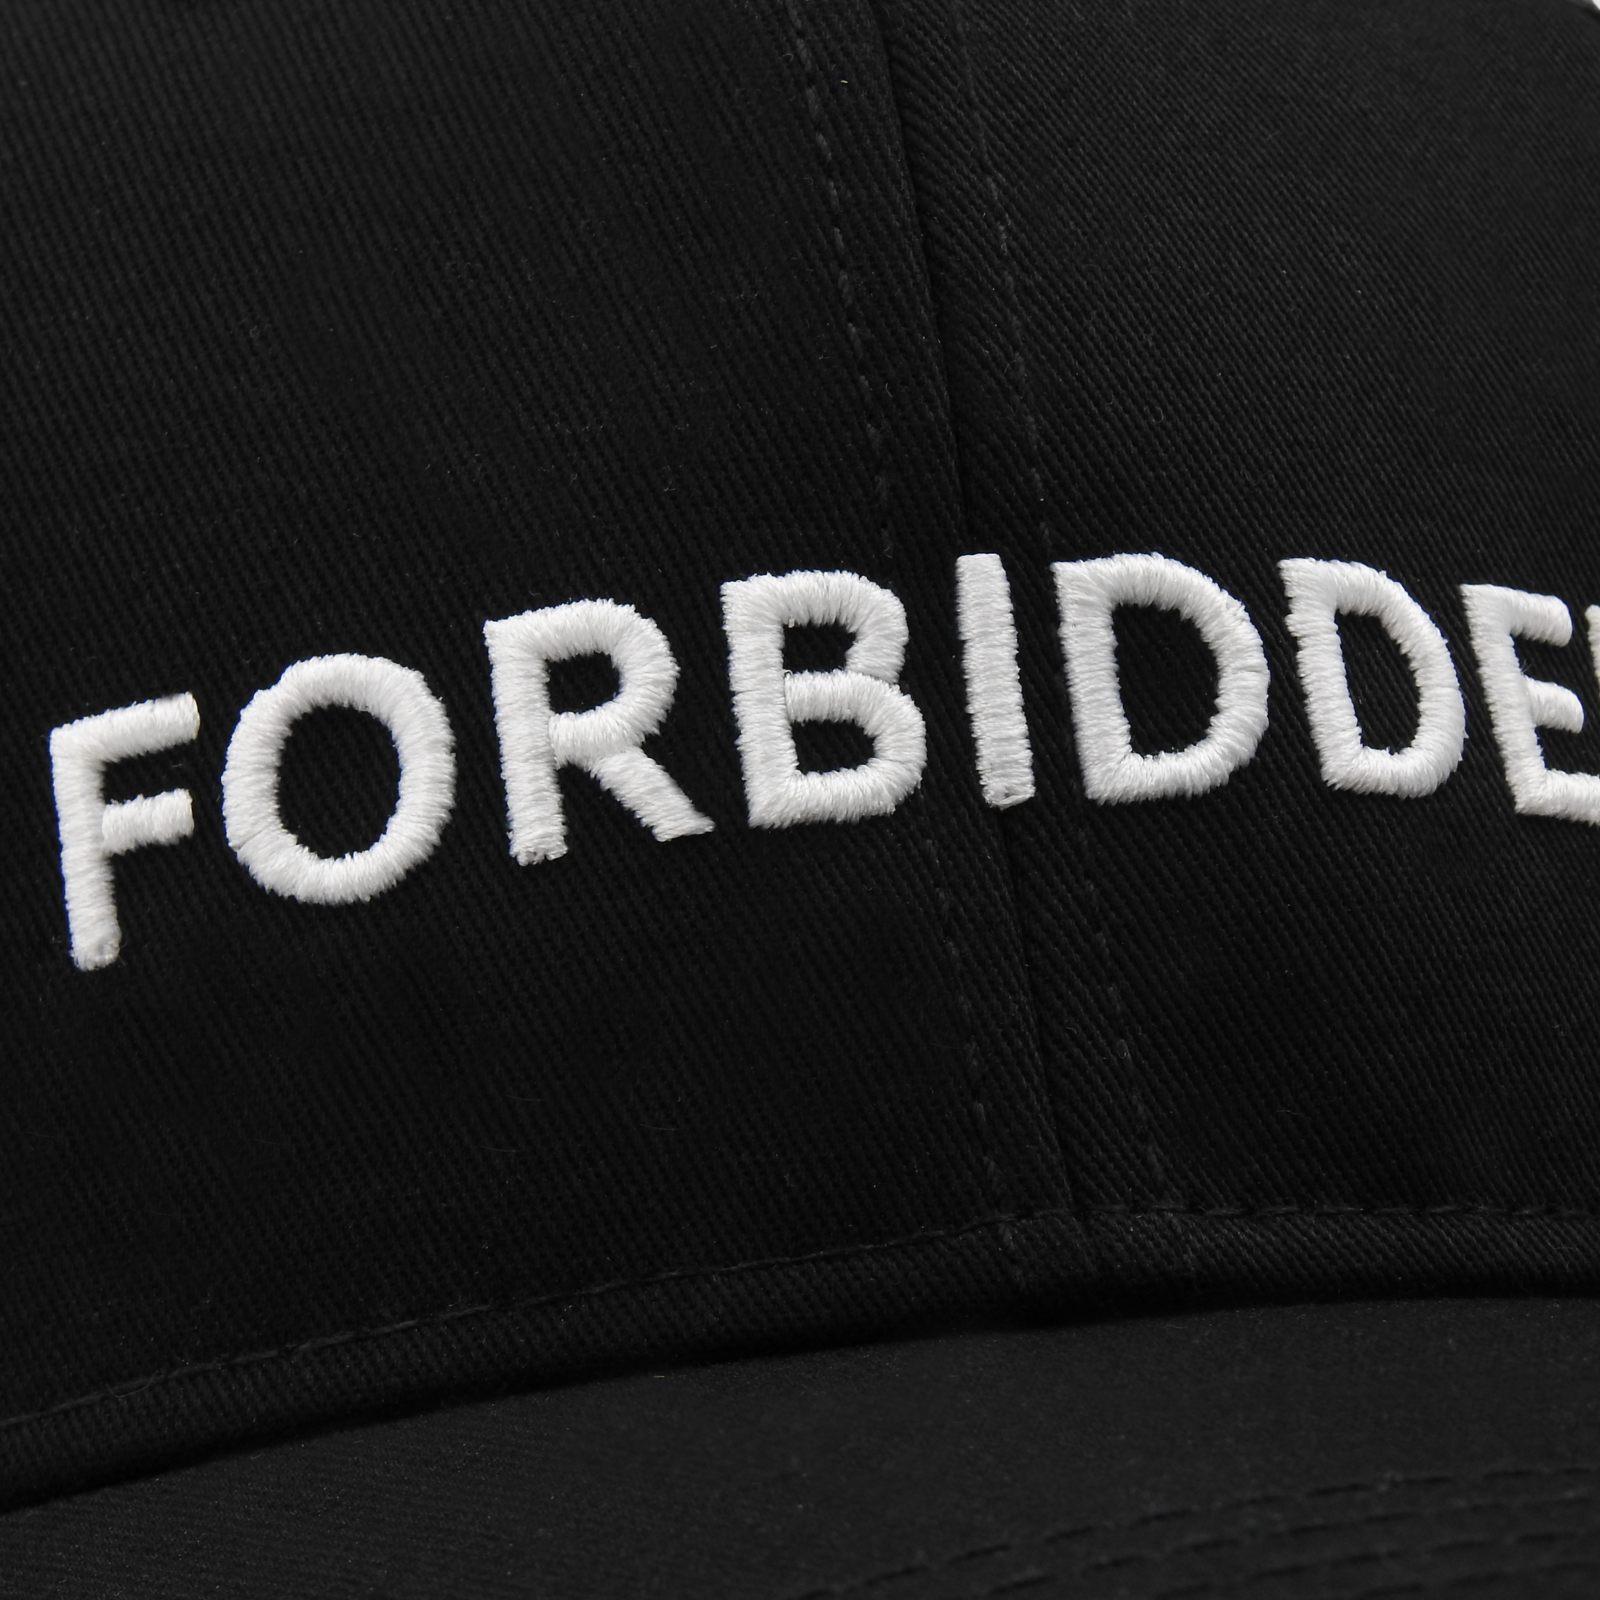 Cap Forbidden - black color